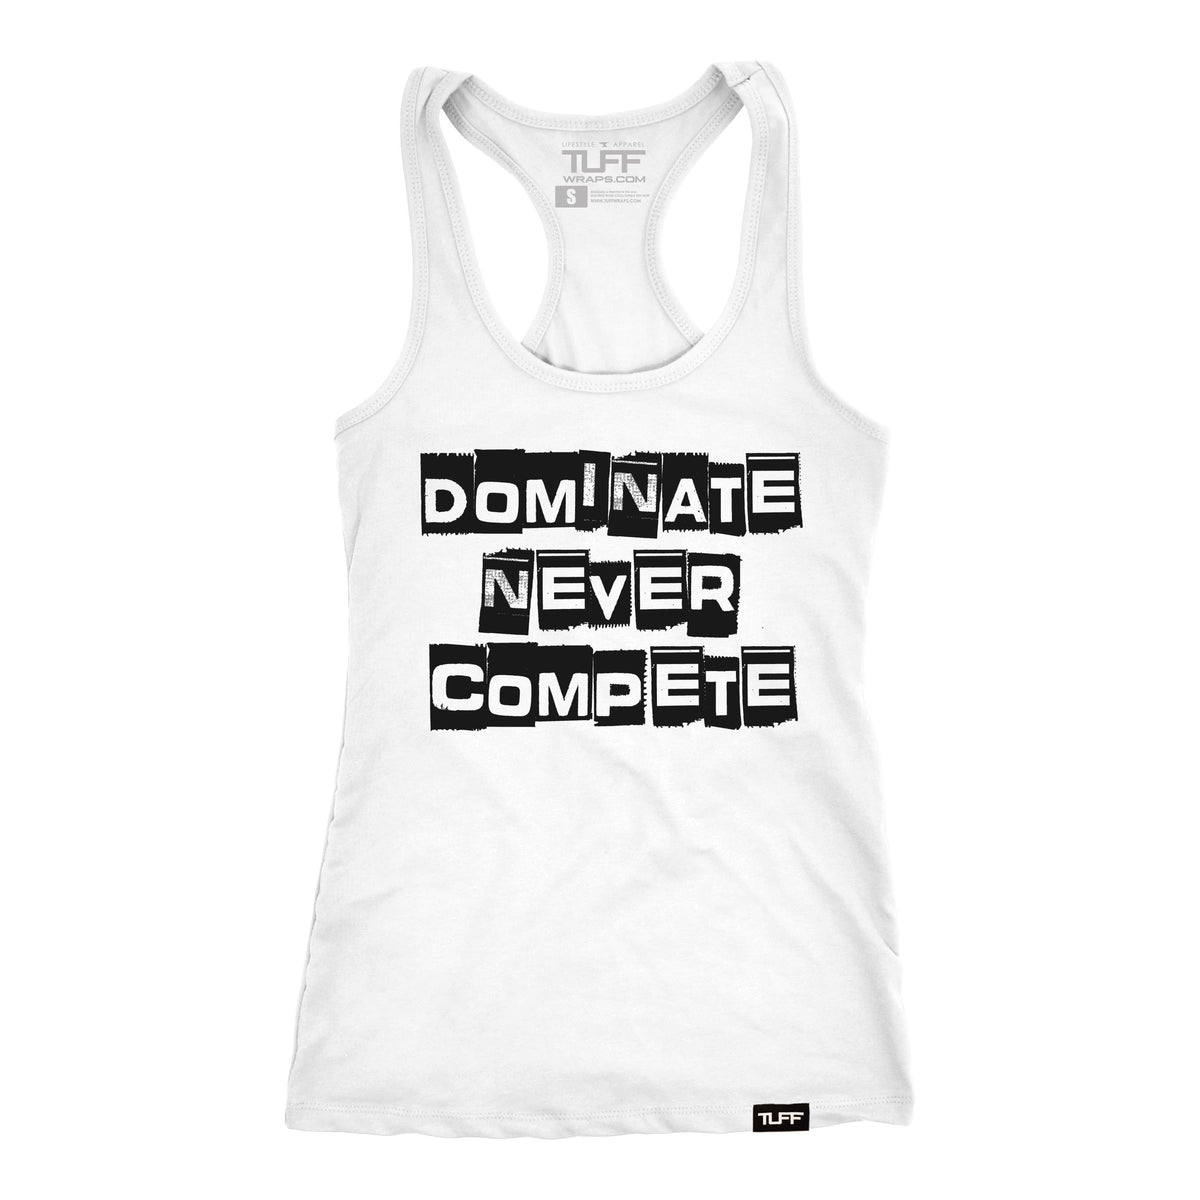 Dominate Never Compete Racerback Tank S / White TuffWraps.com